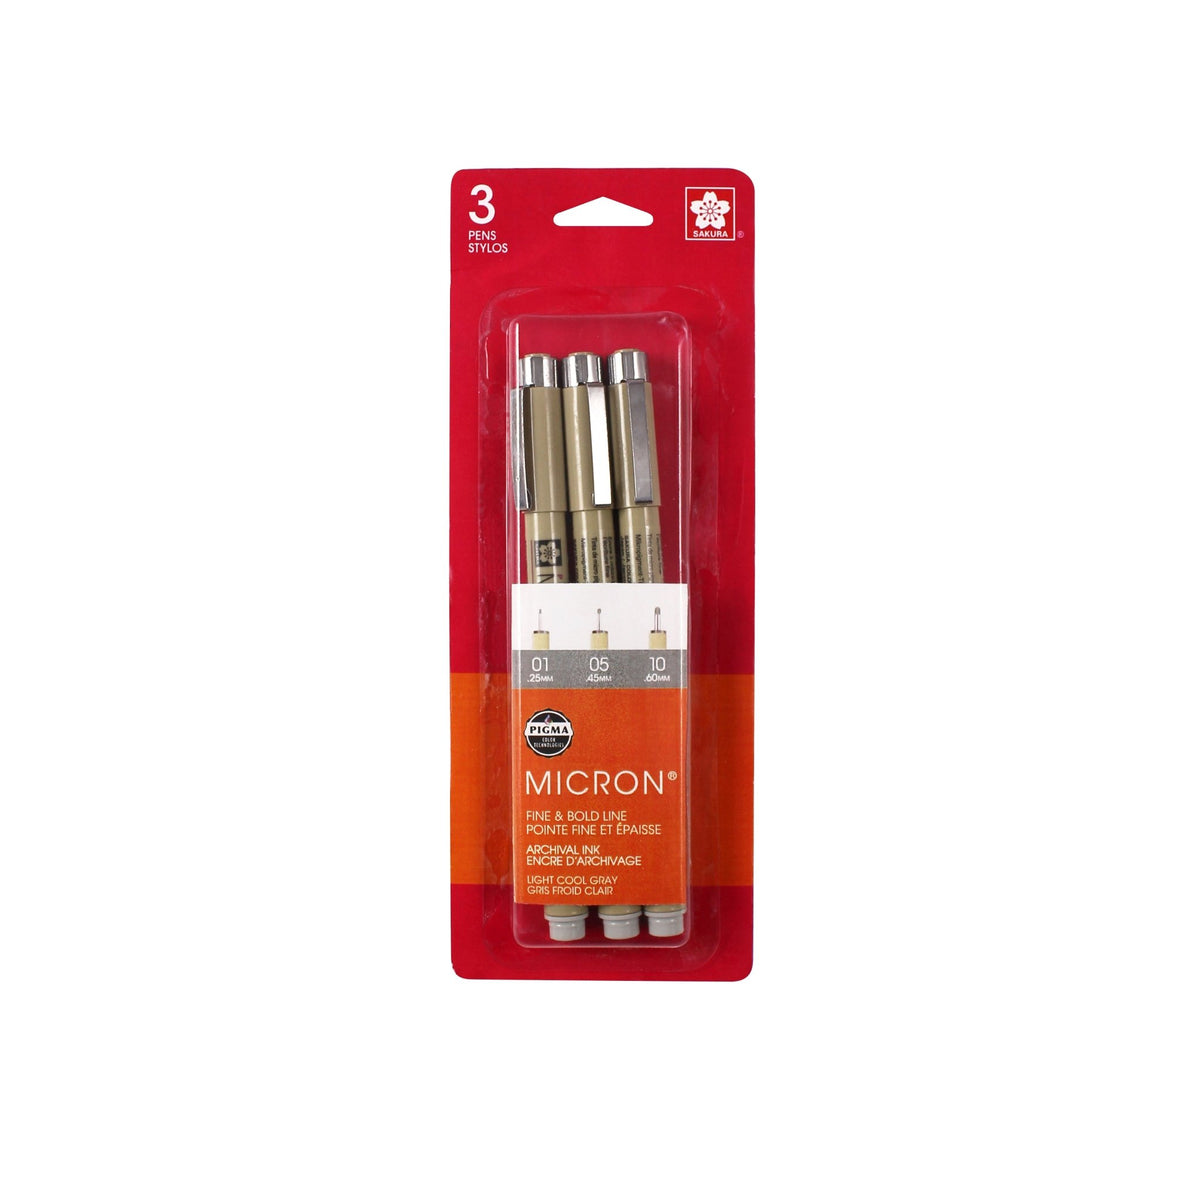 Pigma Micron Pens, 3-Pen Light Cool Gray Set (01, 05, 10) - merriartist.com